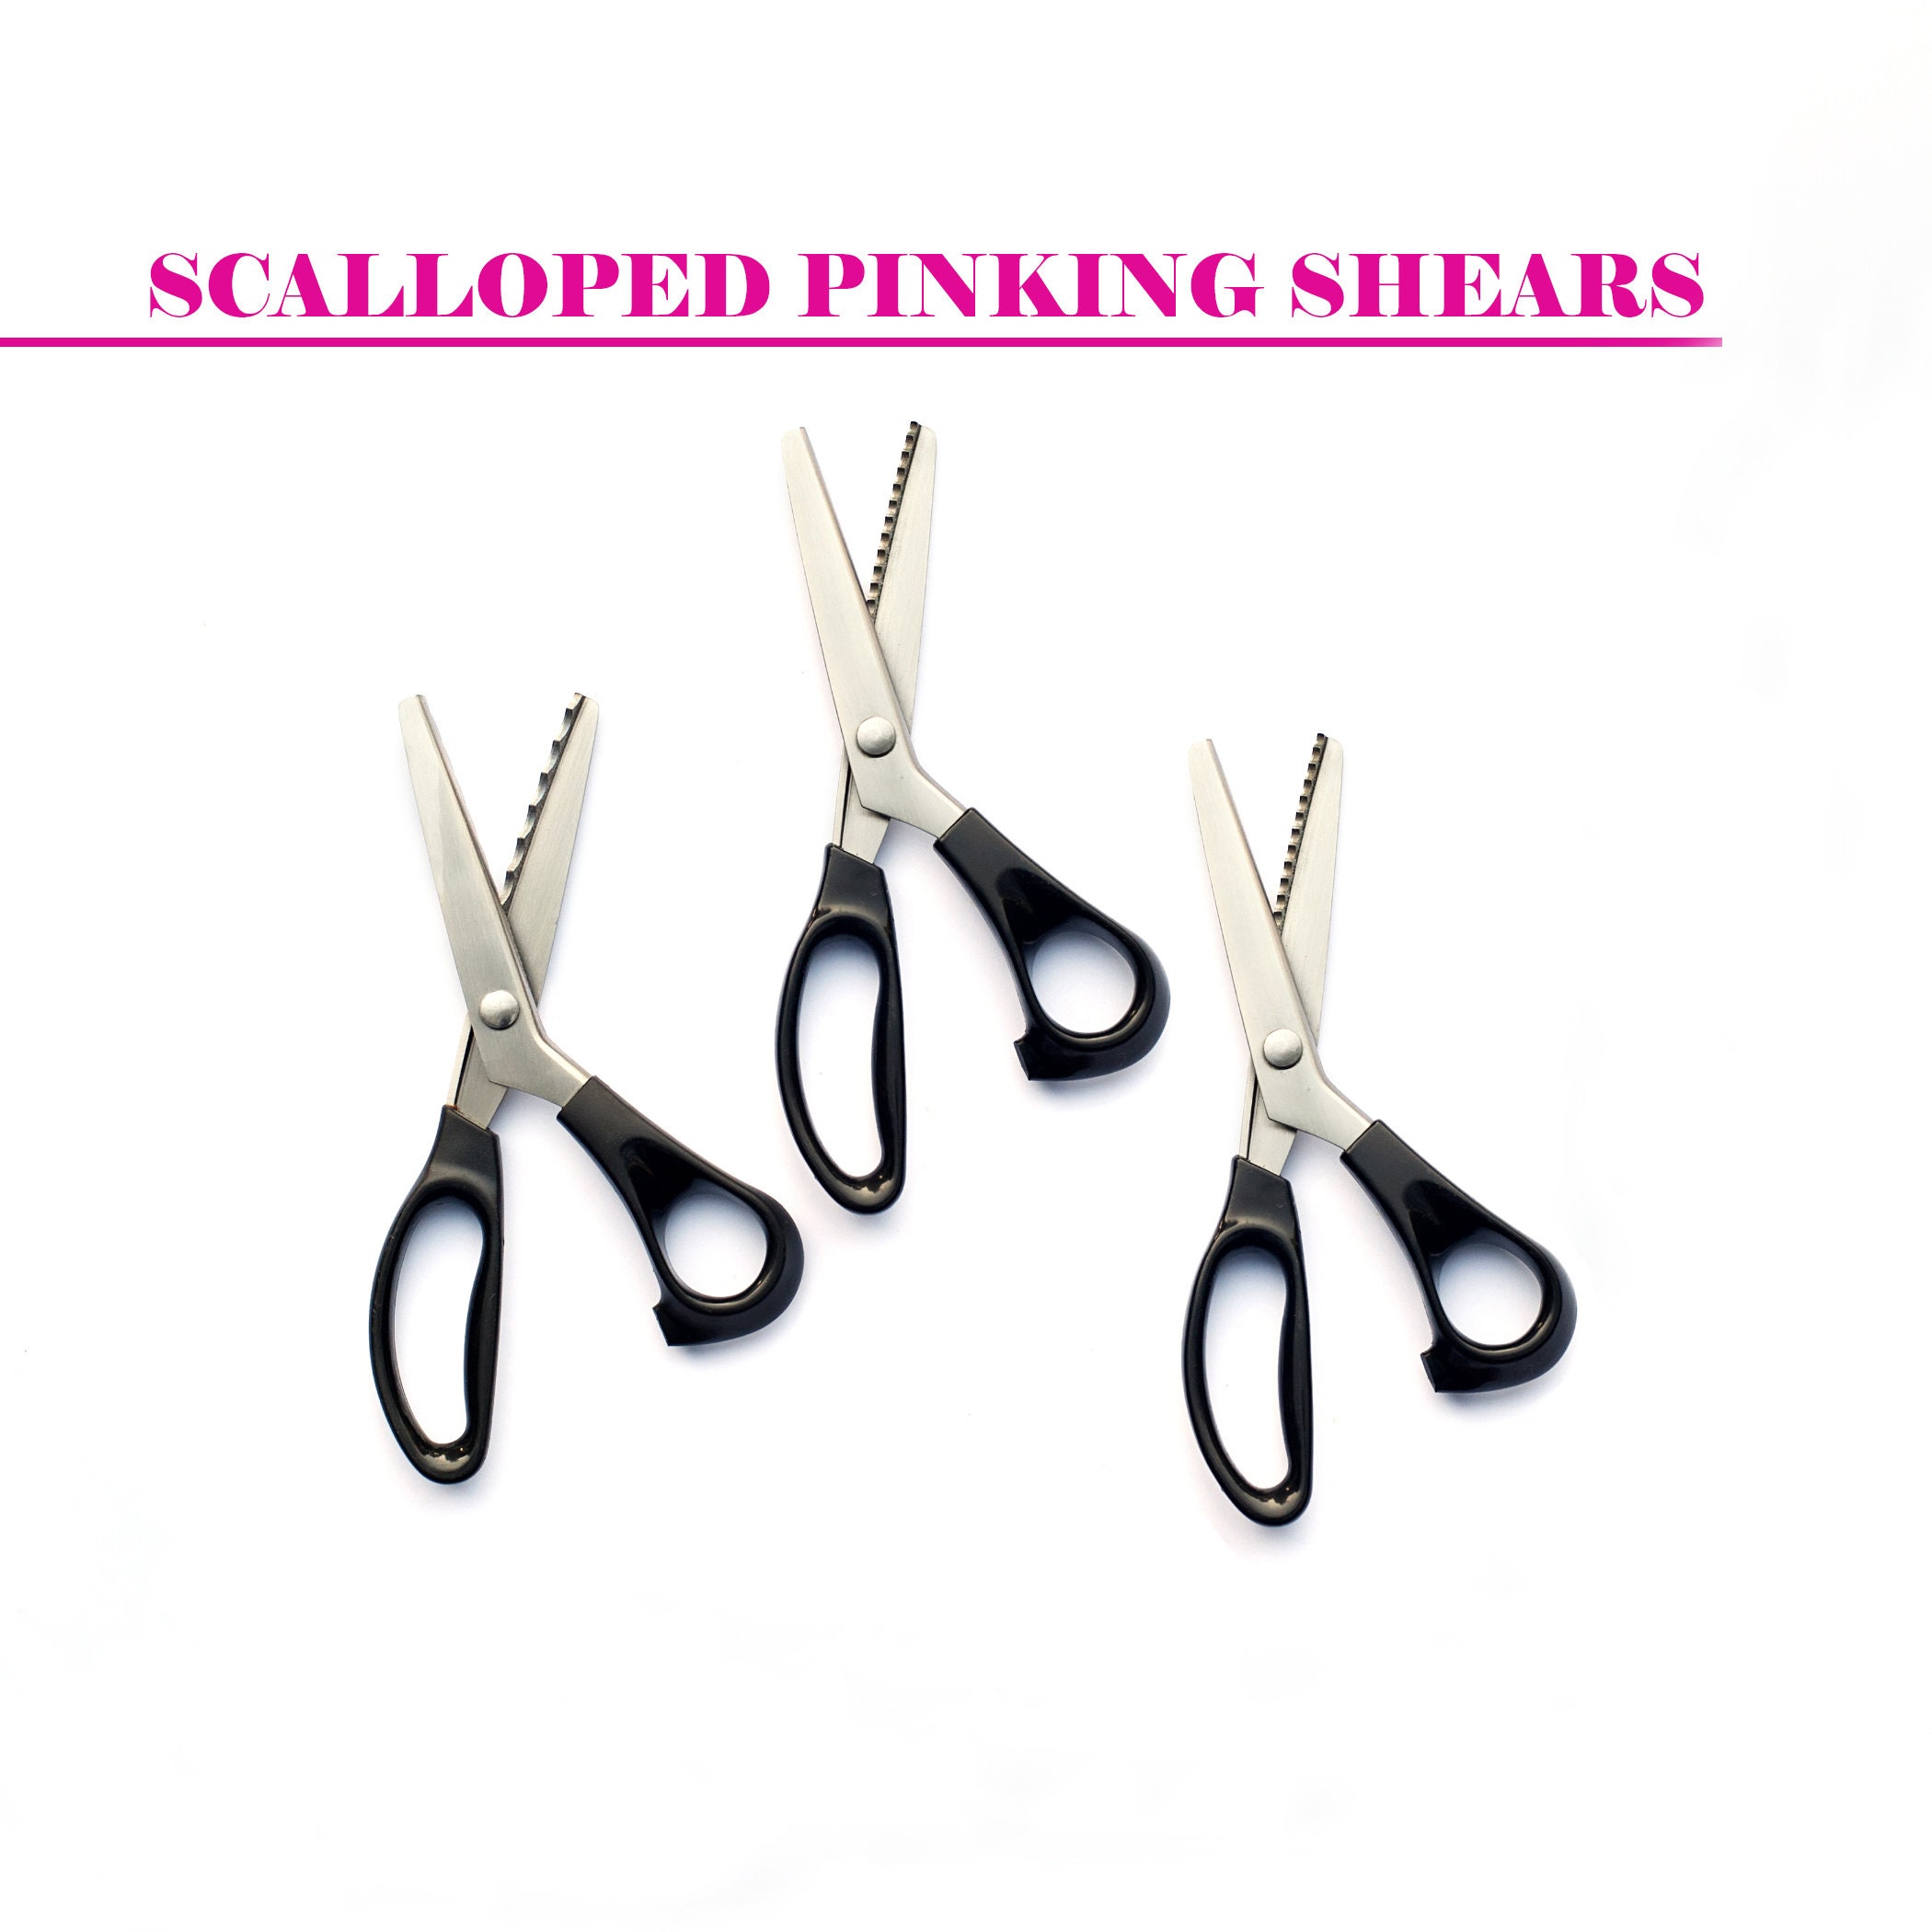 Pinking Shears - Scallop